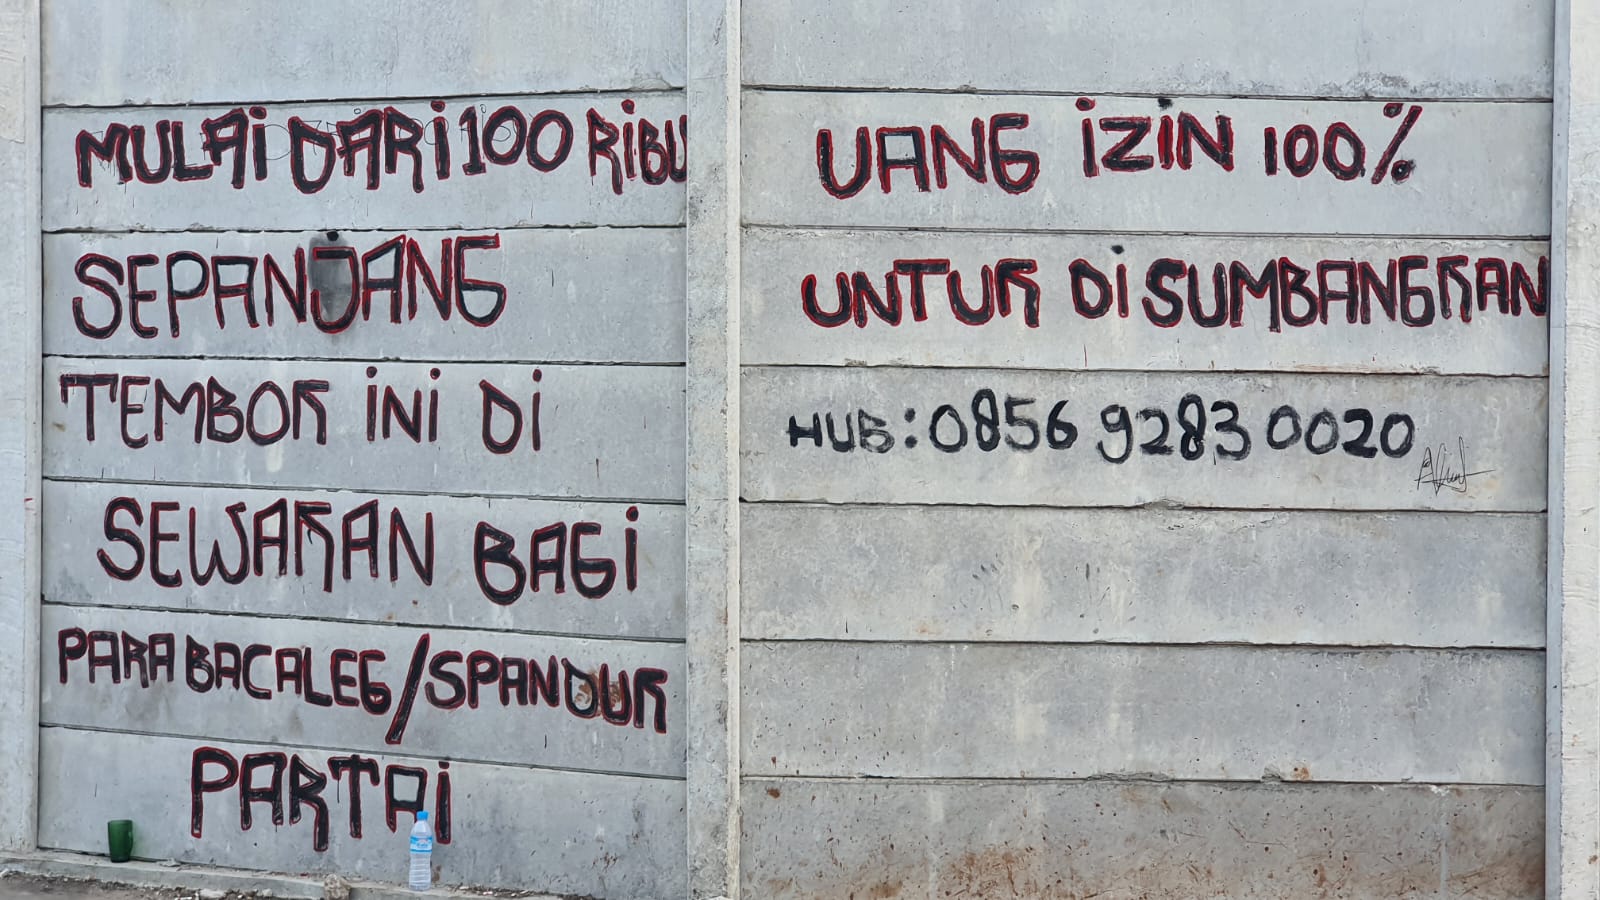 Tembok di Bekasi Dipasang Tarif Rp 100 Ribu Untuk Pasang Spanduk Caleg dan Partai Politik